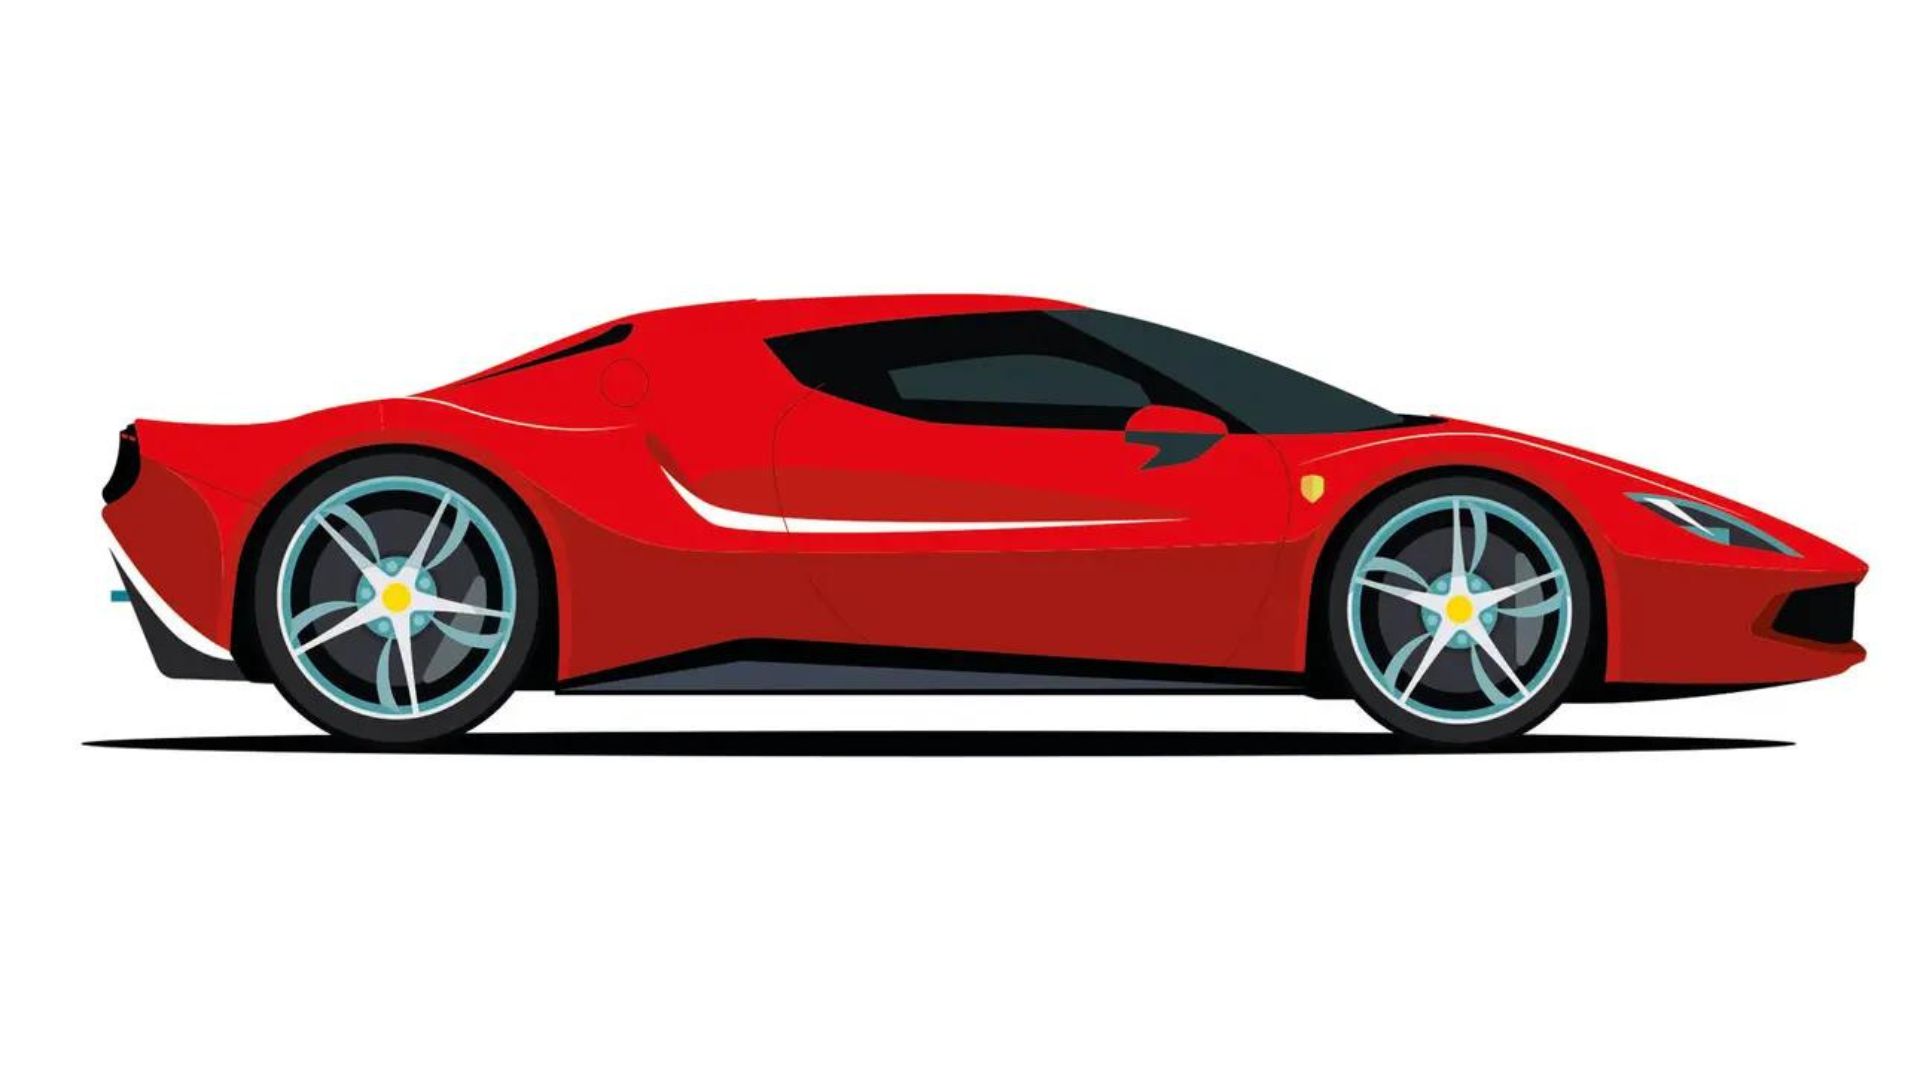 Greatest Ferrari road cars of all time: 296 GTB